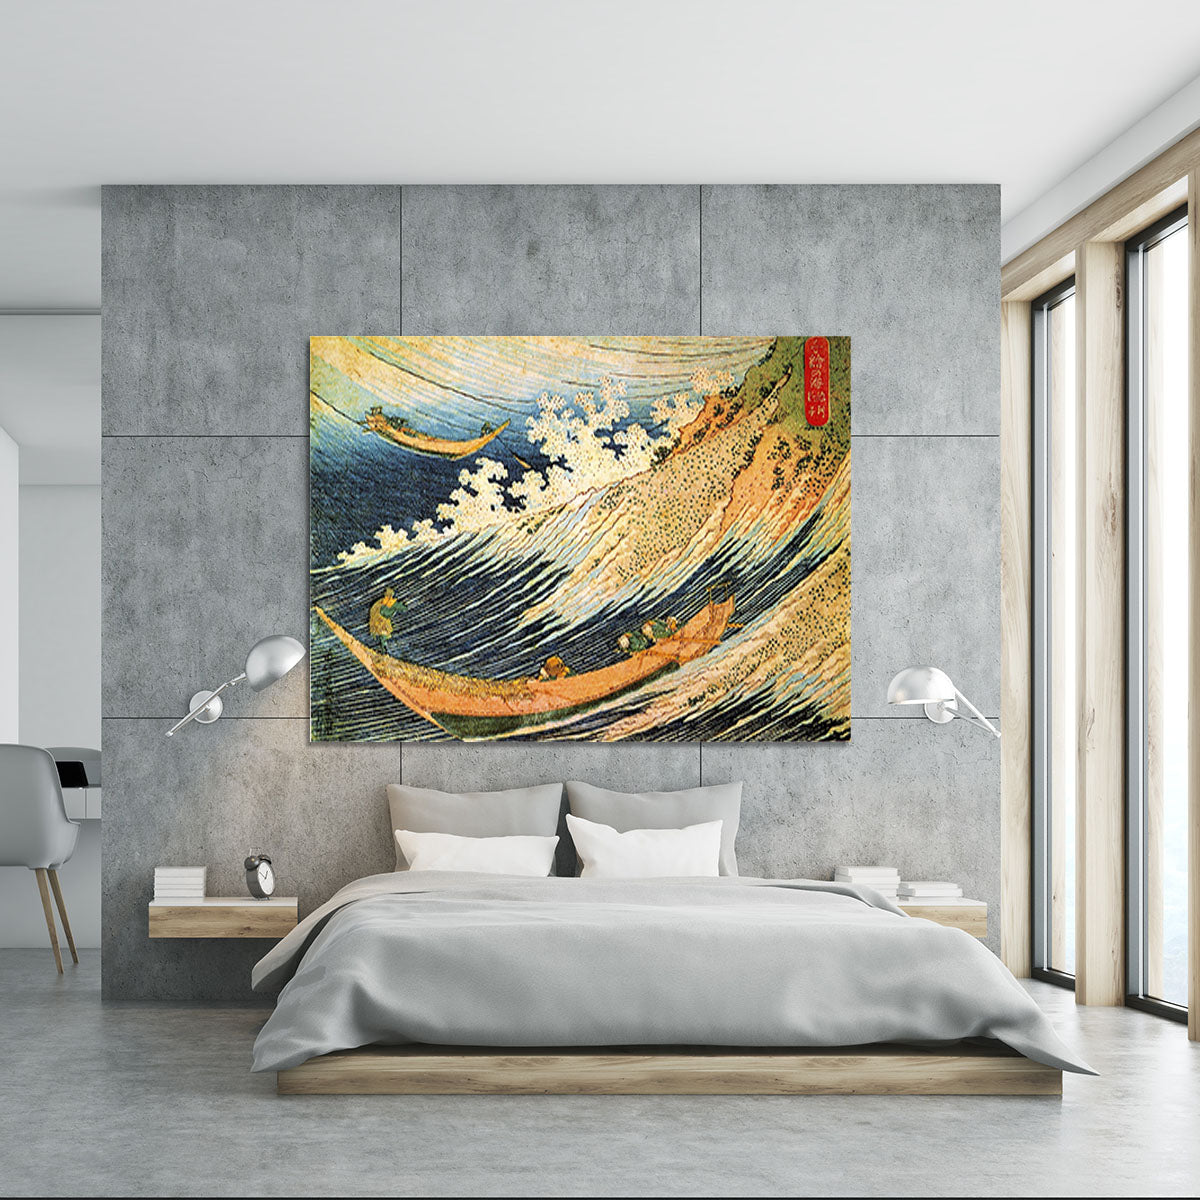 Ocean landscape 2 by Hokusai Canvas Print or Poster - Canvas Art Rocks - 5